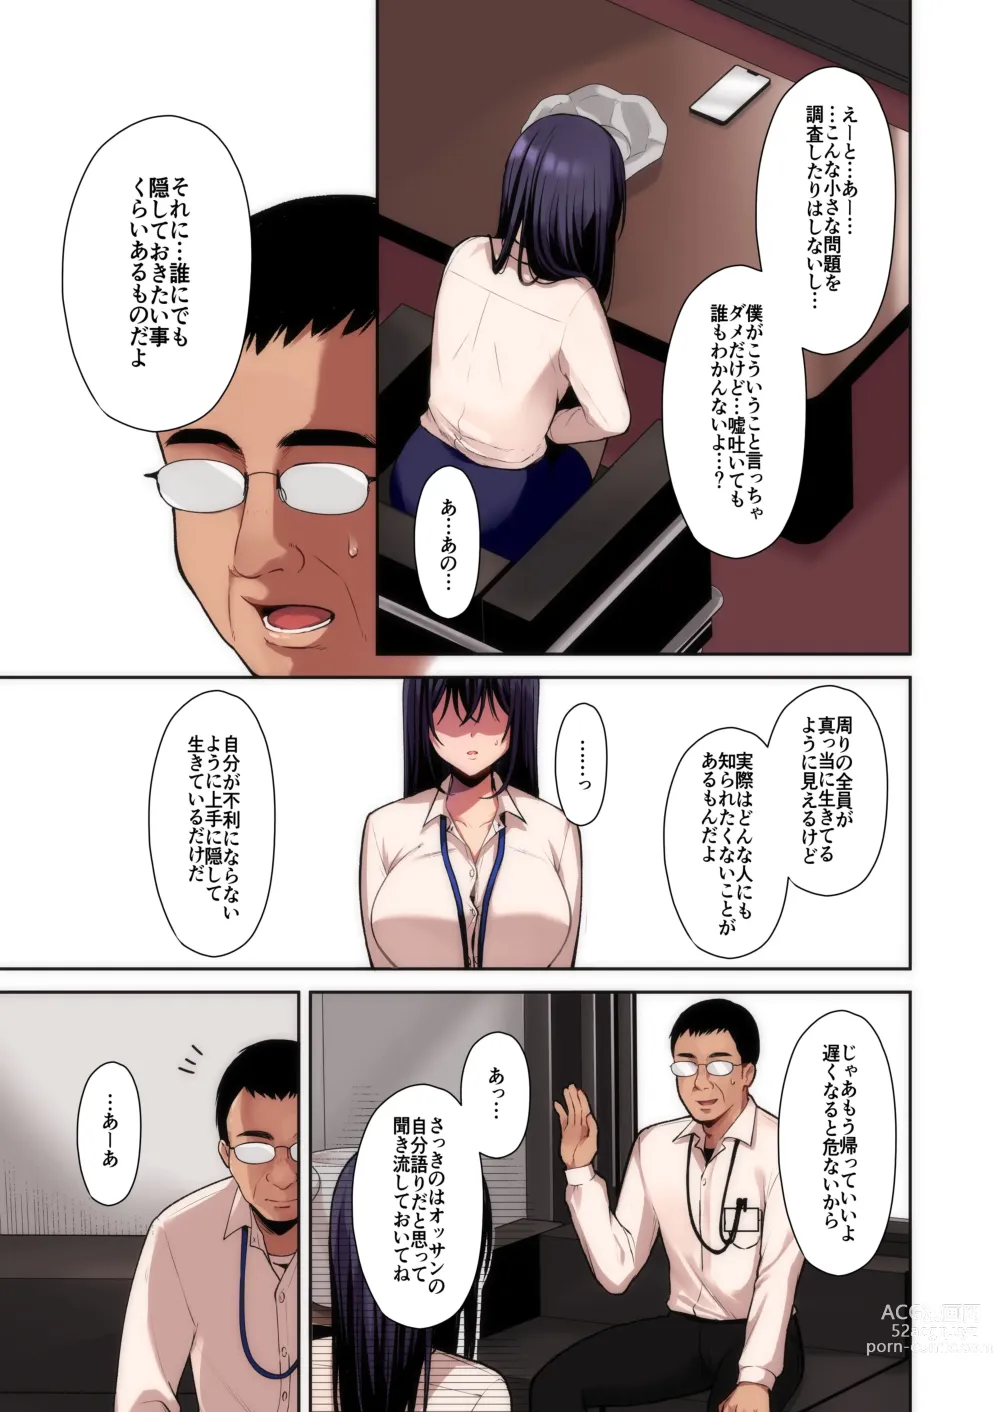 Page 8 of doujinshi 泡沫〜裏垢ドM派遣OLオナホ調教〜 フルカラー版